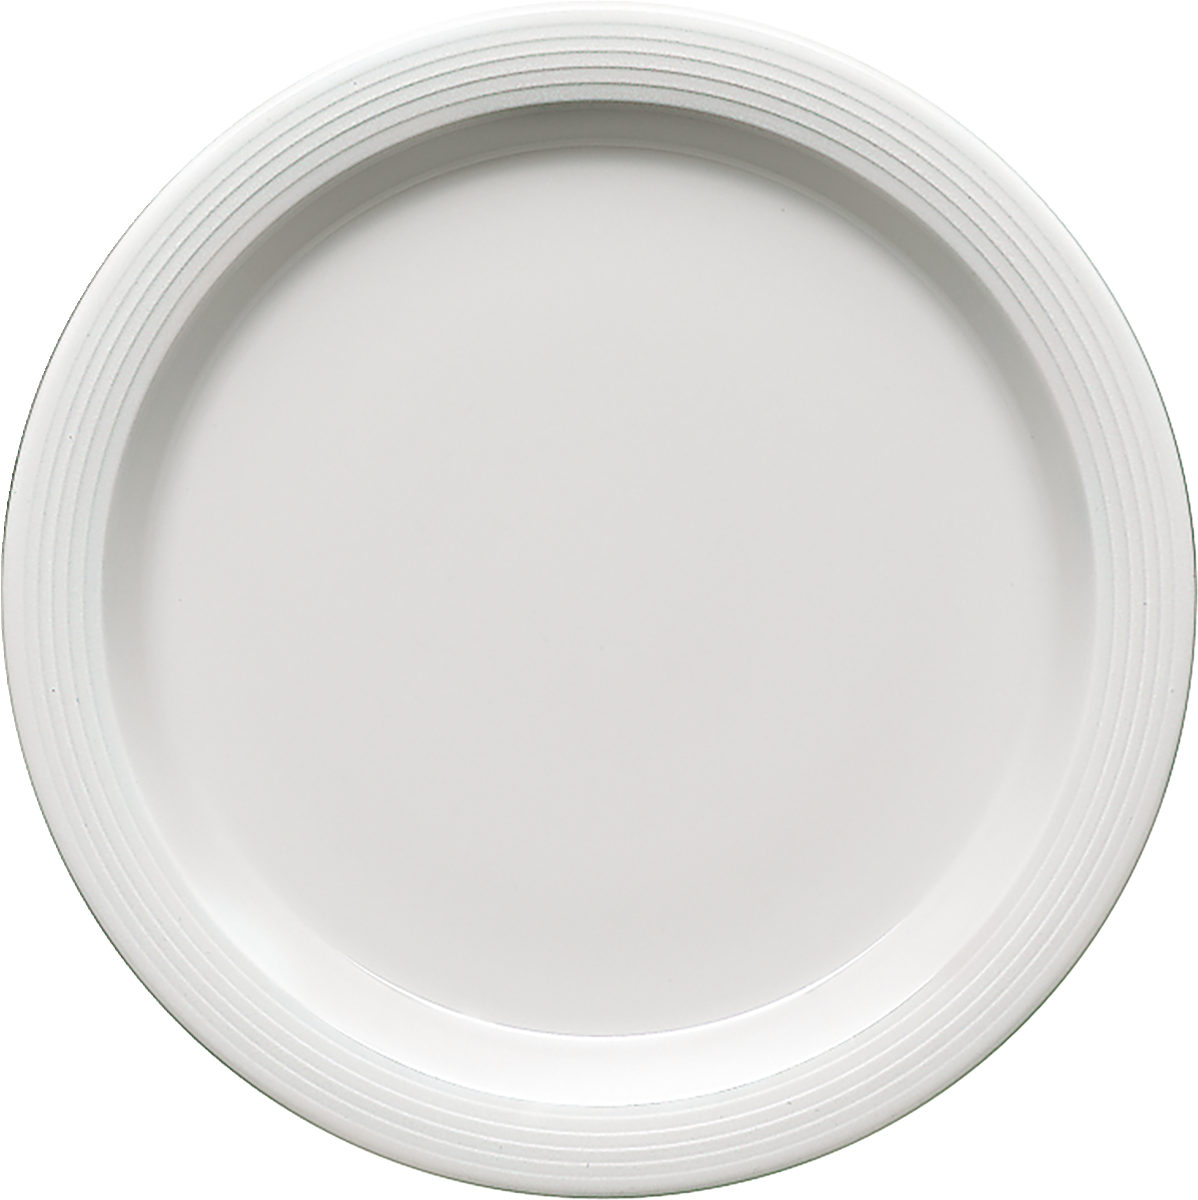 Plate half-deep round with rim embossed 24cm